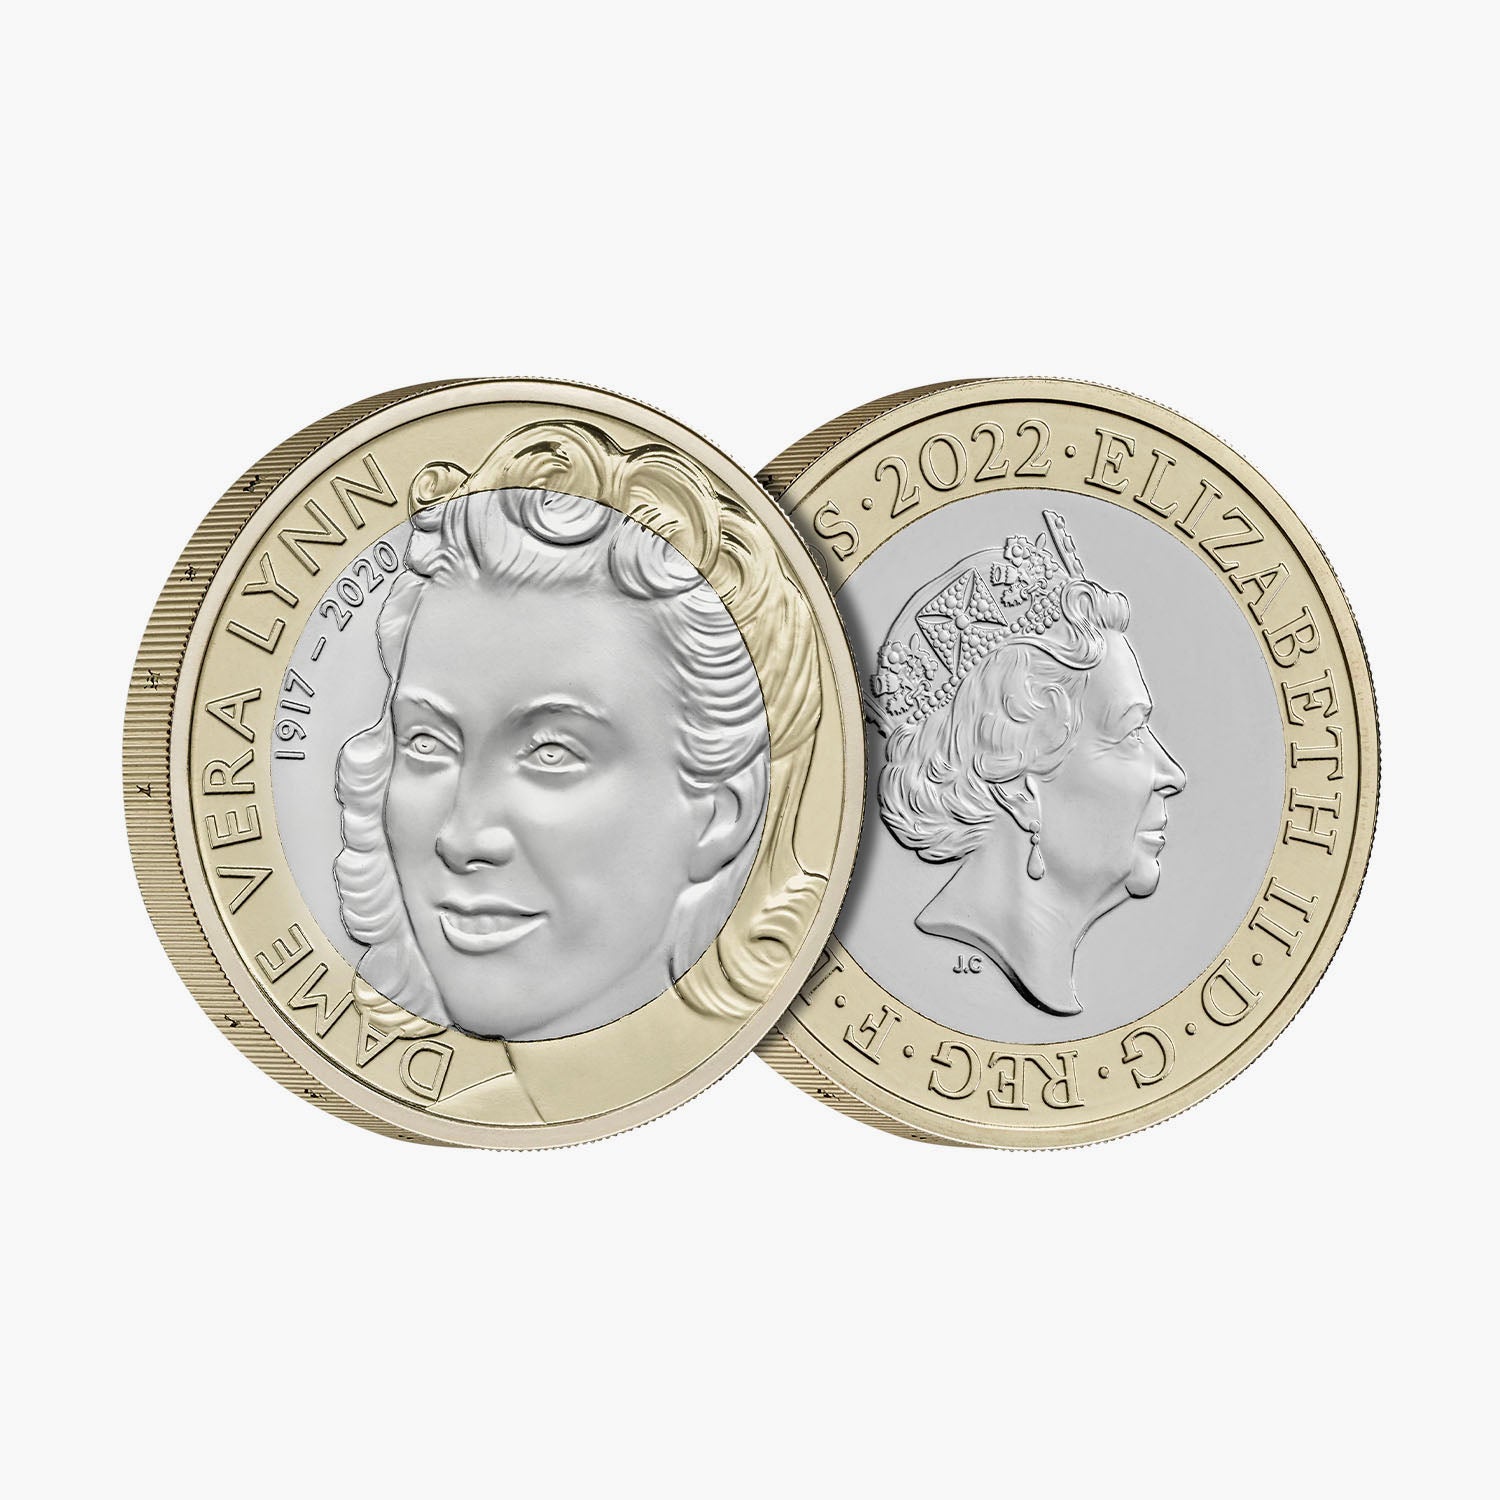 The 2022 United Kingdom Brilliant Uncirculated Annual Coin Set